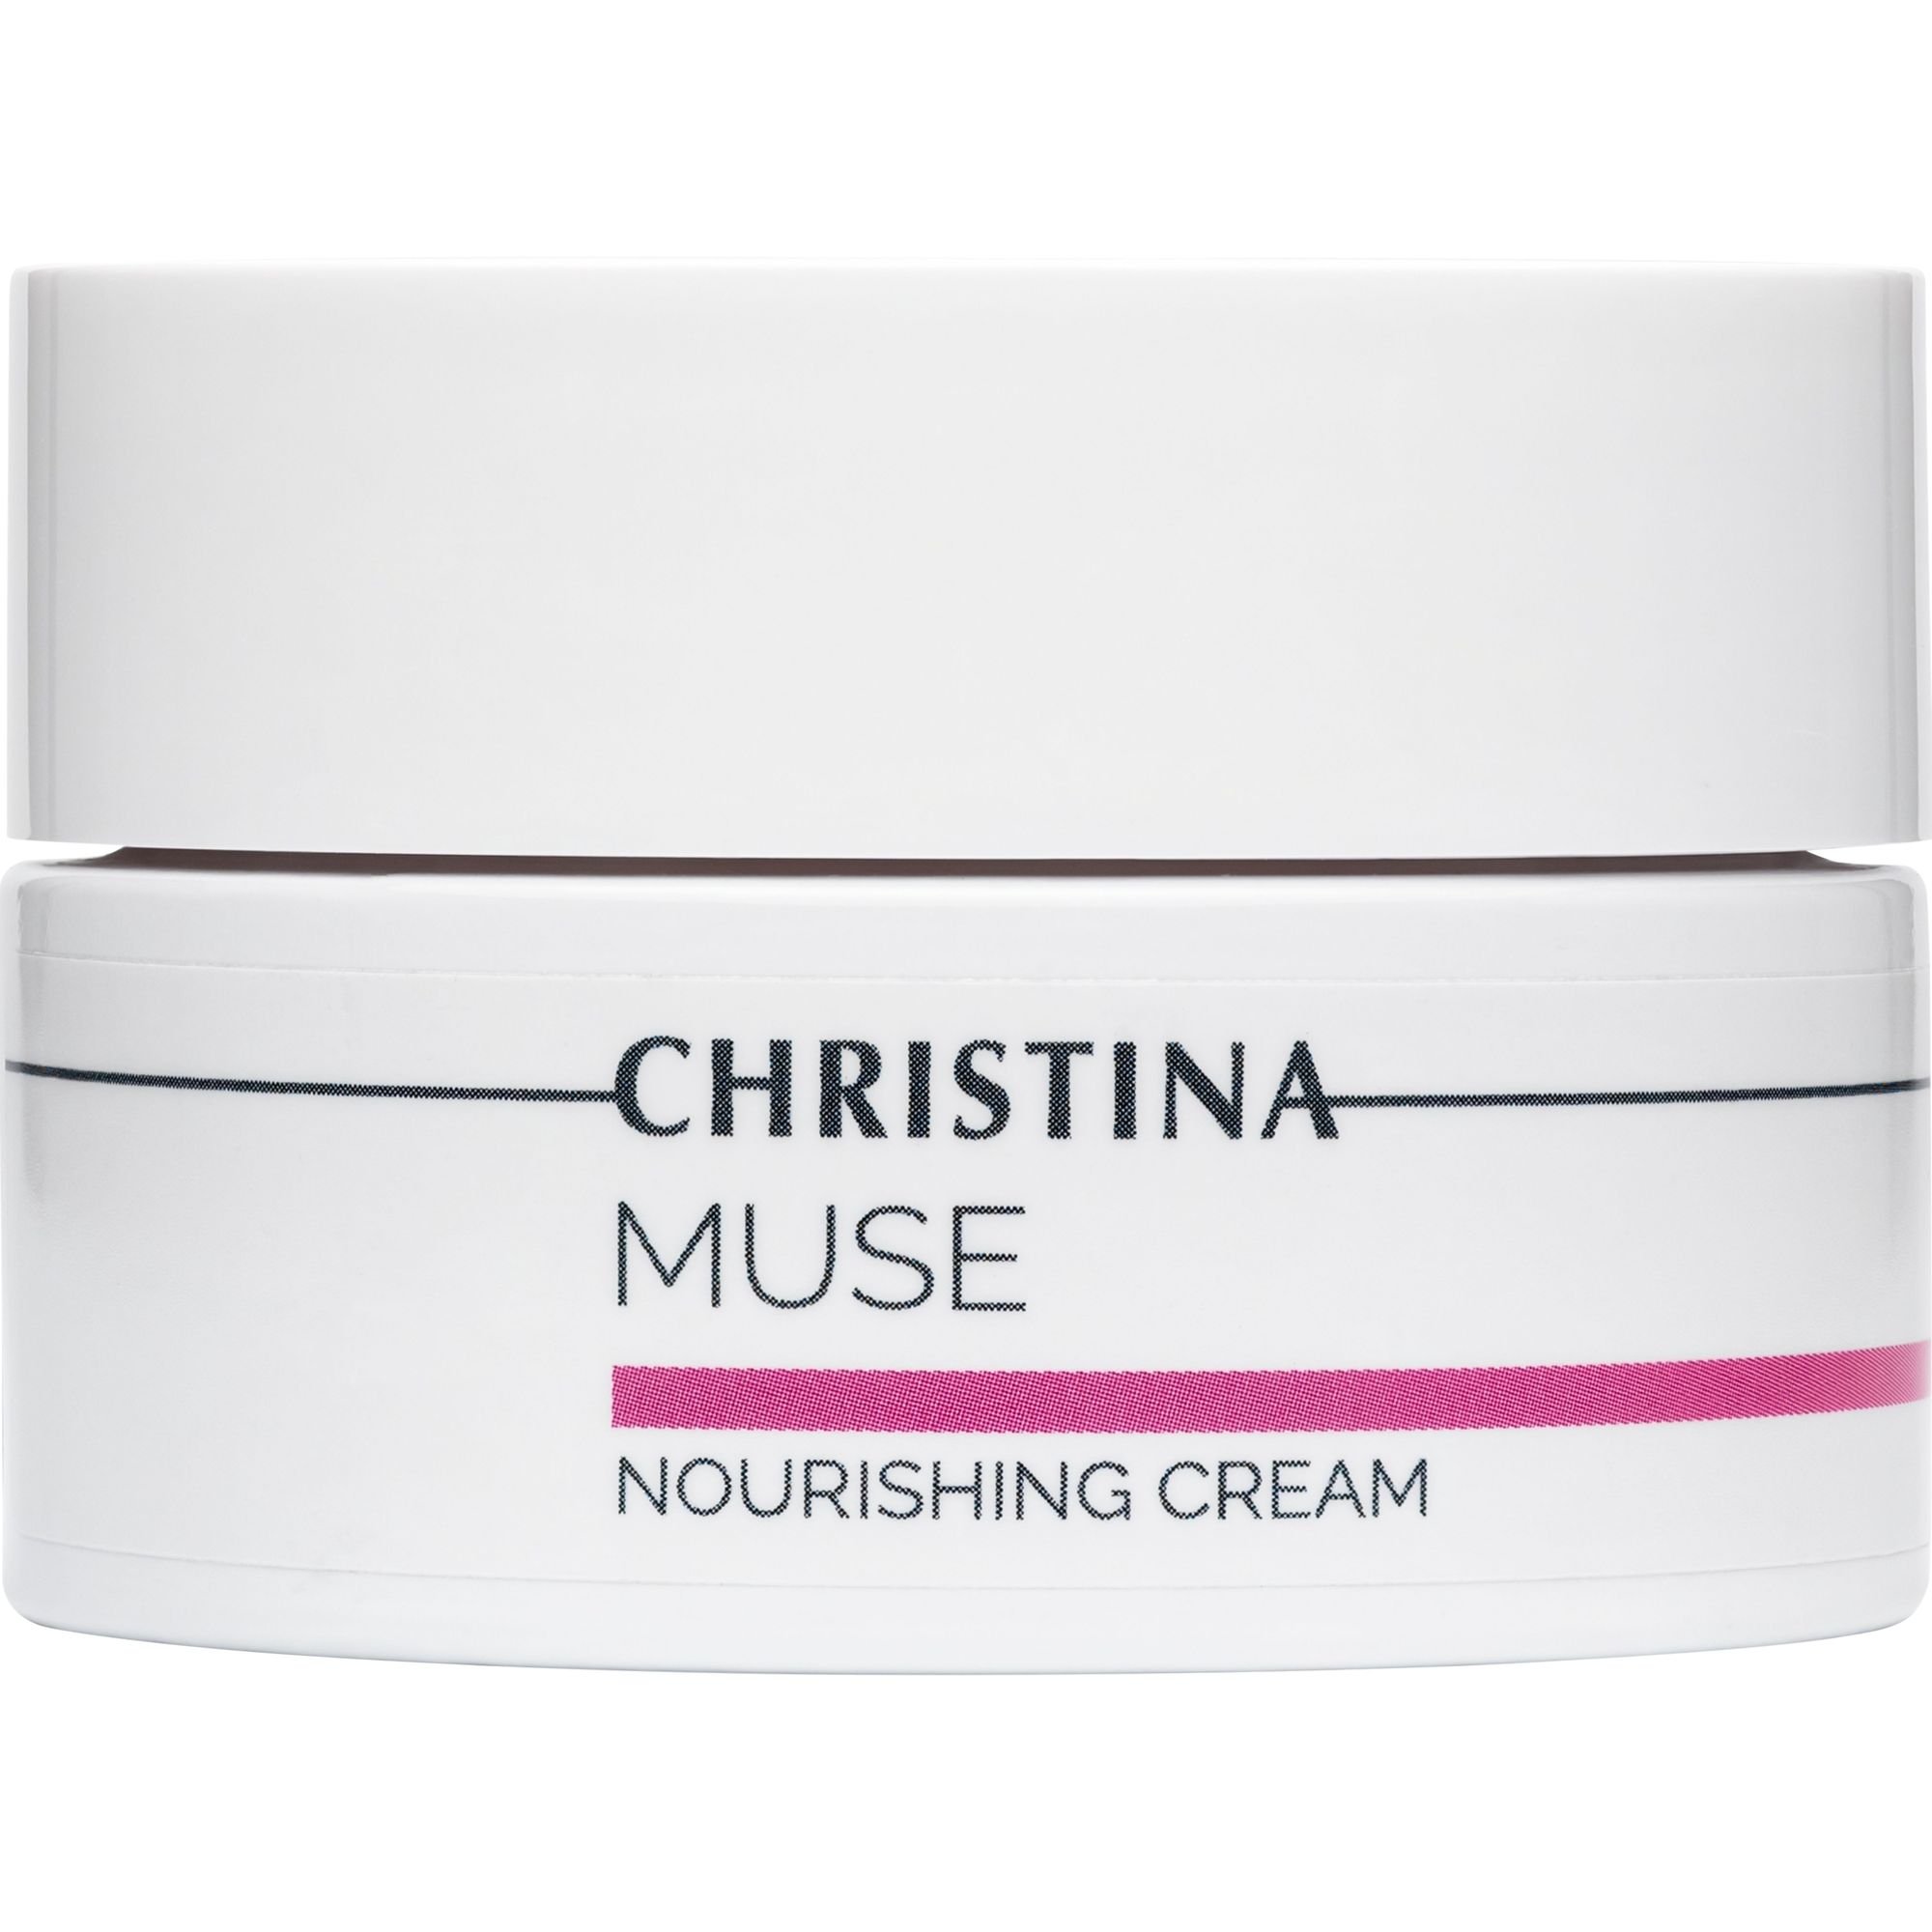 Питающий крем Christina Muse Nourishing Cream 50 мл - фото 1